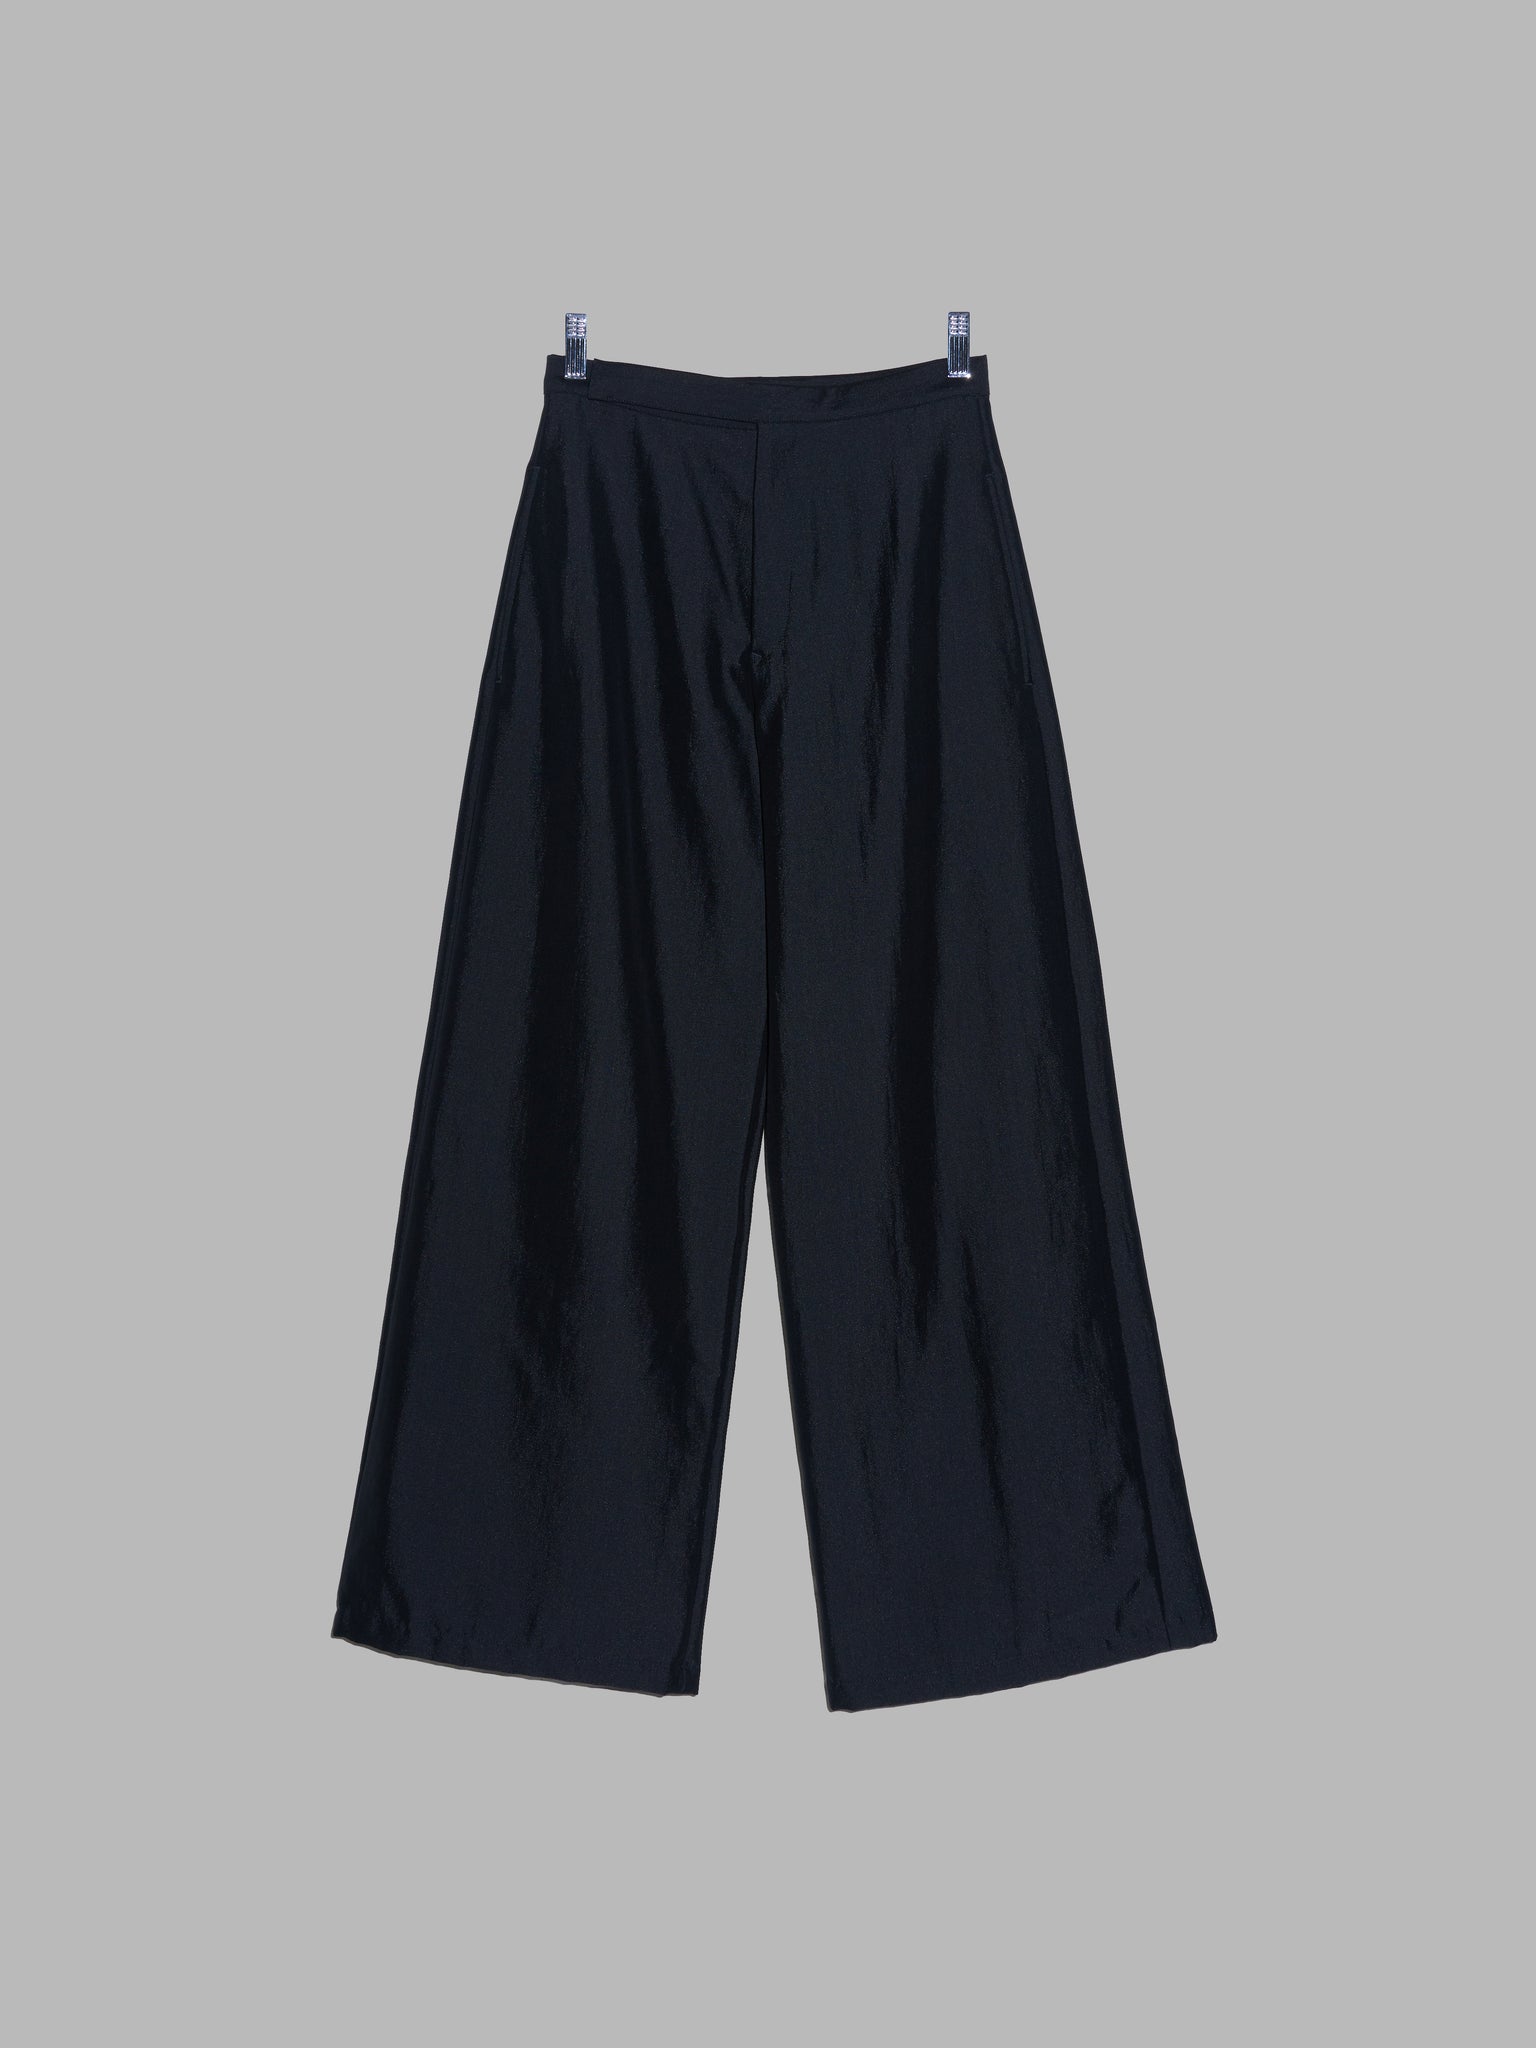 Y's Yohji Yamamoto sheeny black wool nylon wide leg trousers - womens S